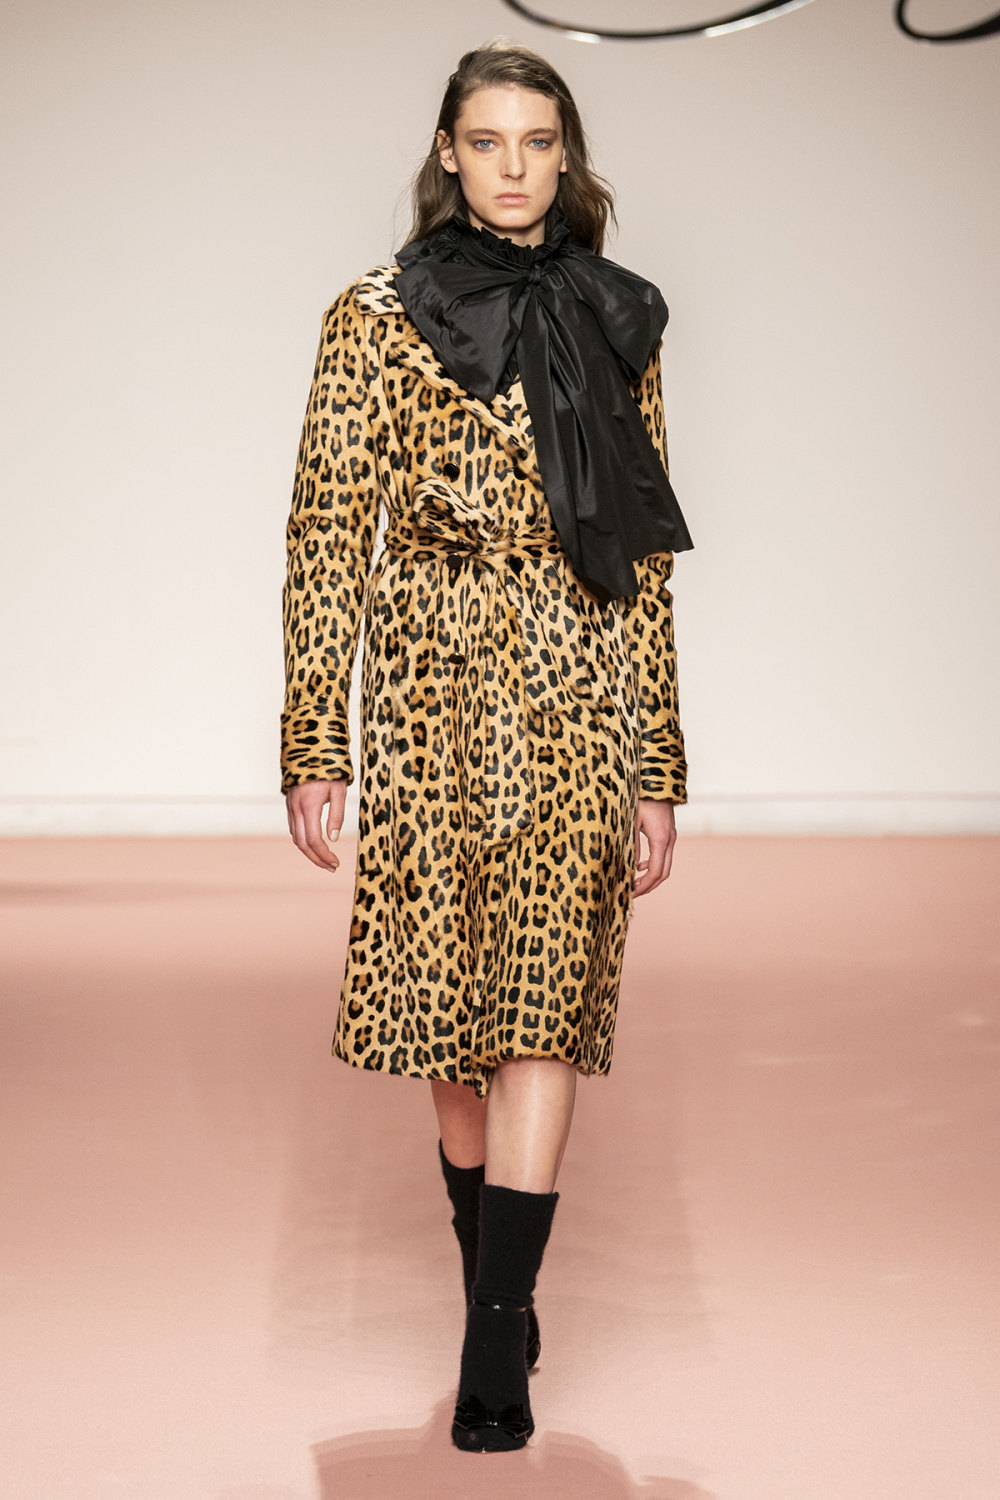 Blumarine时装系列的豹纹印花再次出现在笨拙的裙子上-7.jpg